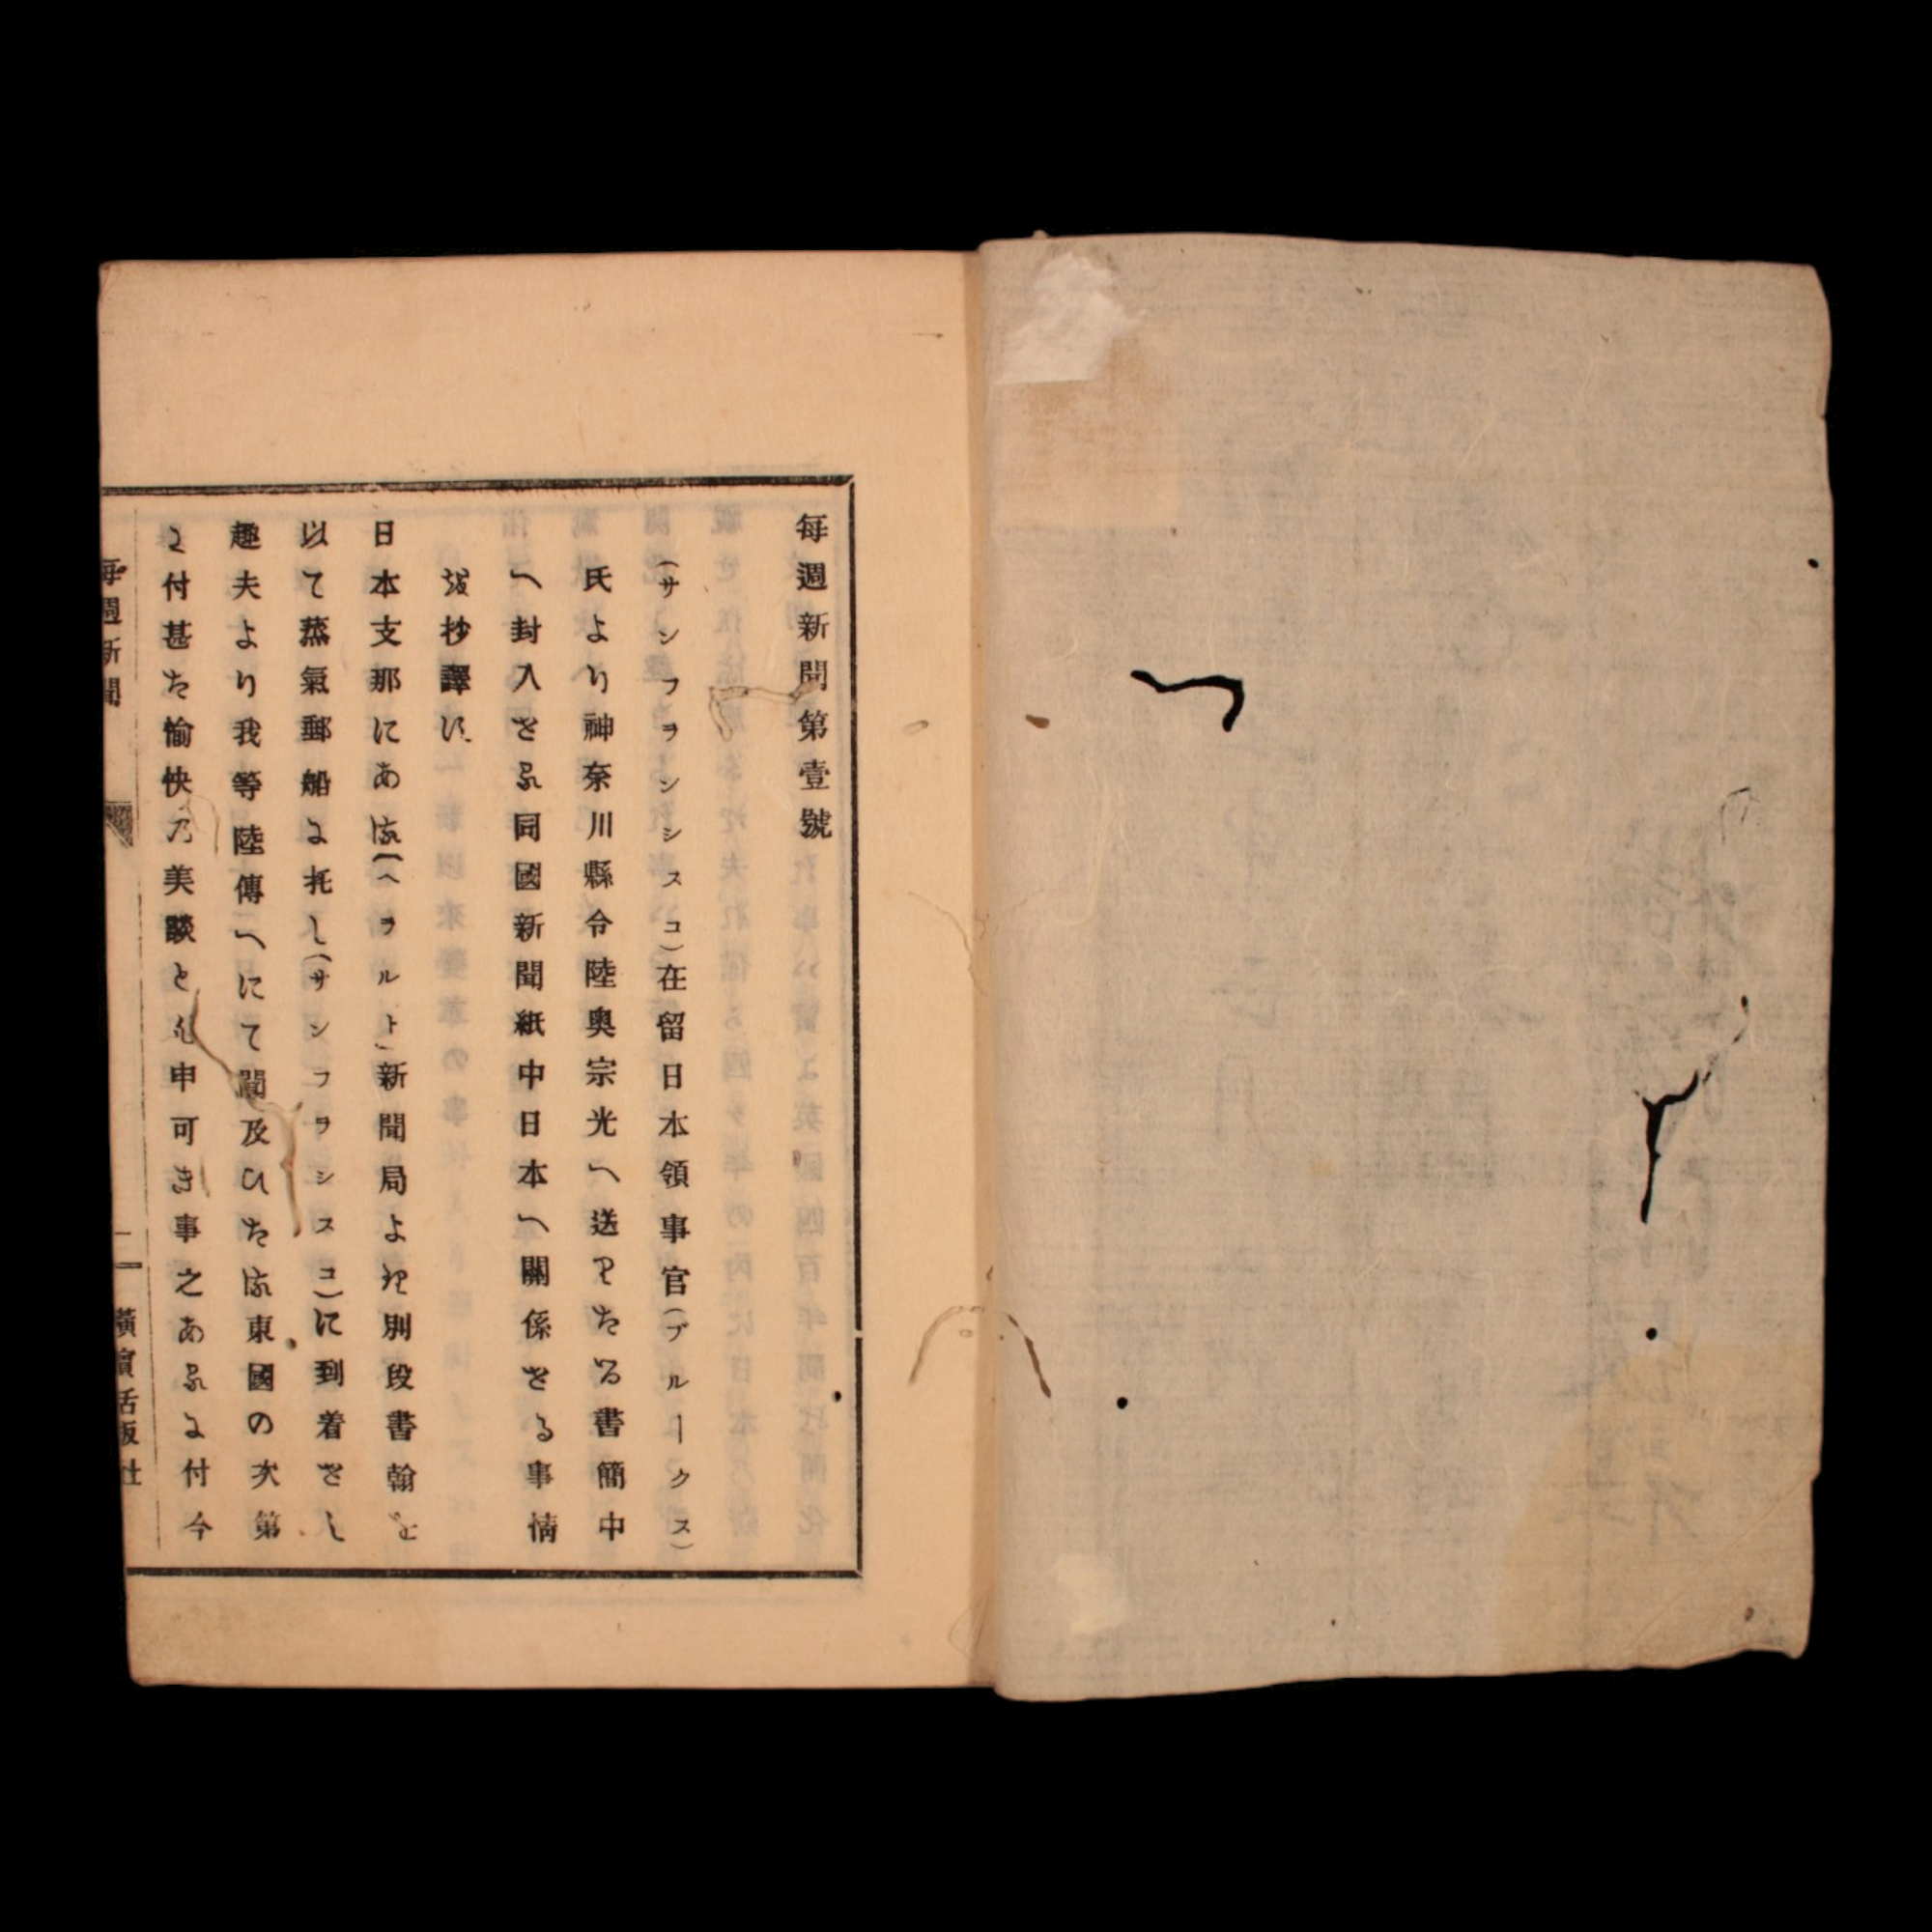 Weekly Newspaper - Keio 4 (1868) - Keio Era Japan